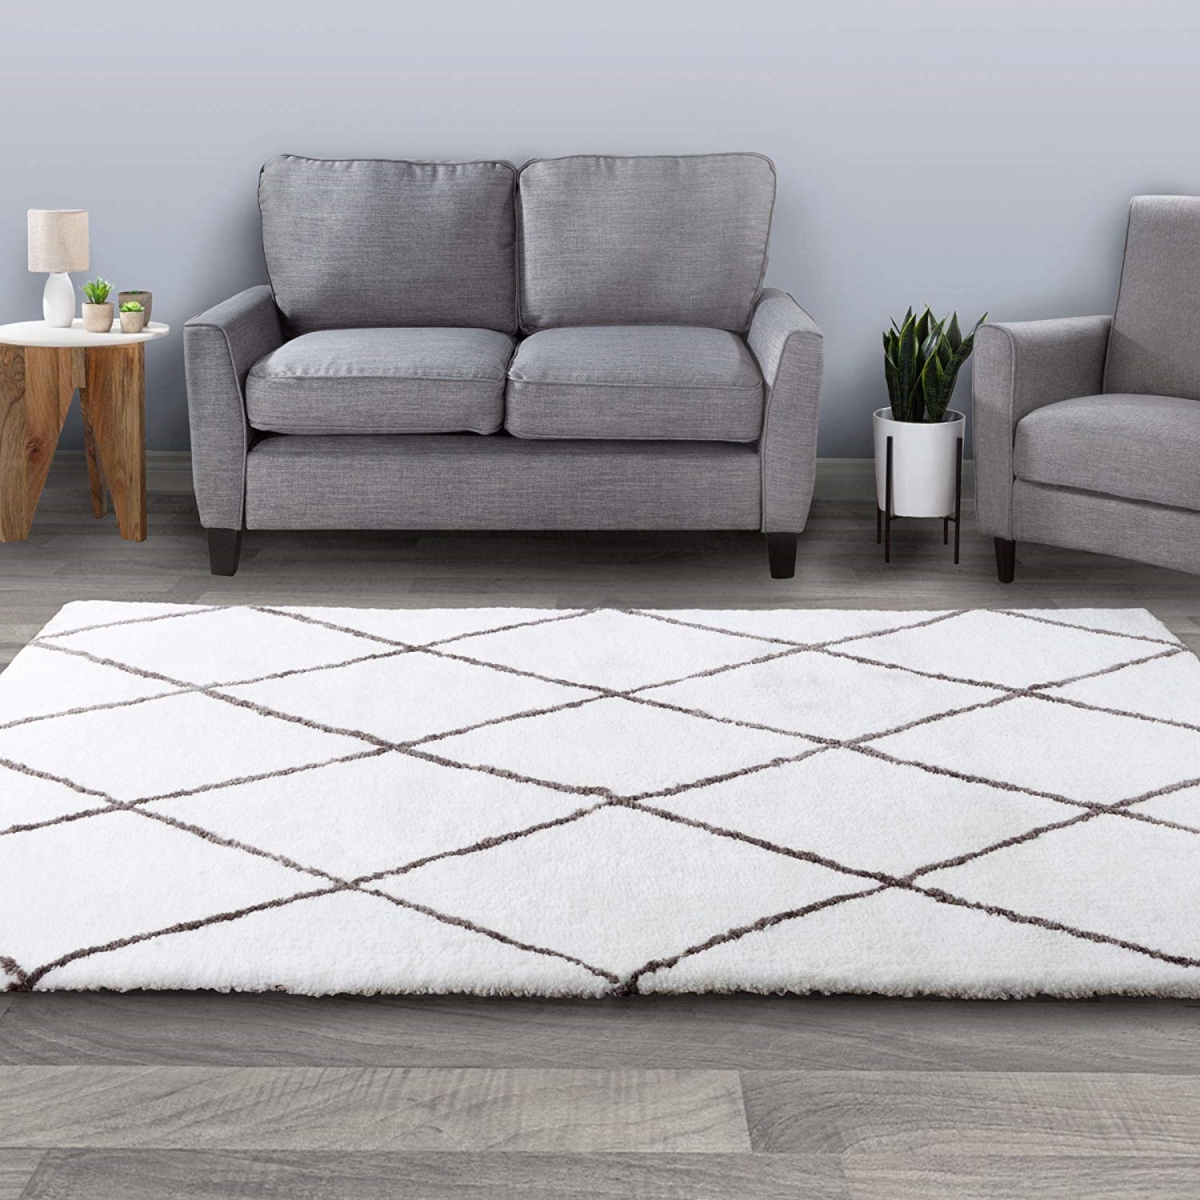 62a-64340 8 X 10 Ft. Diamond Shag Area Rug-plush Pattern Carpet, Ivory & Gray